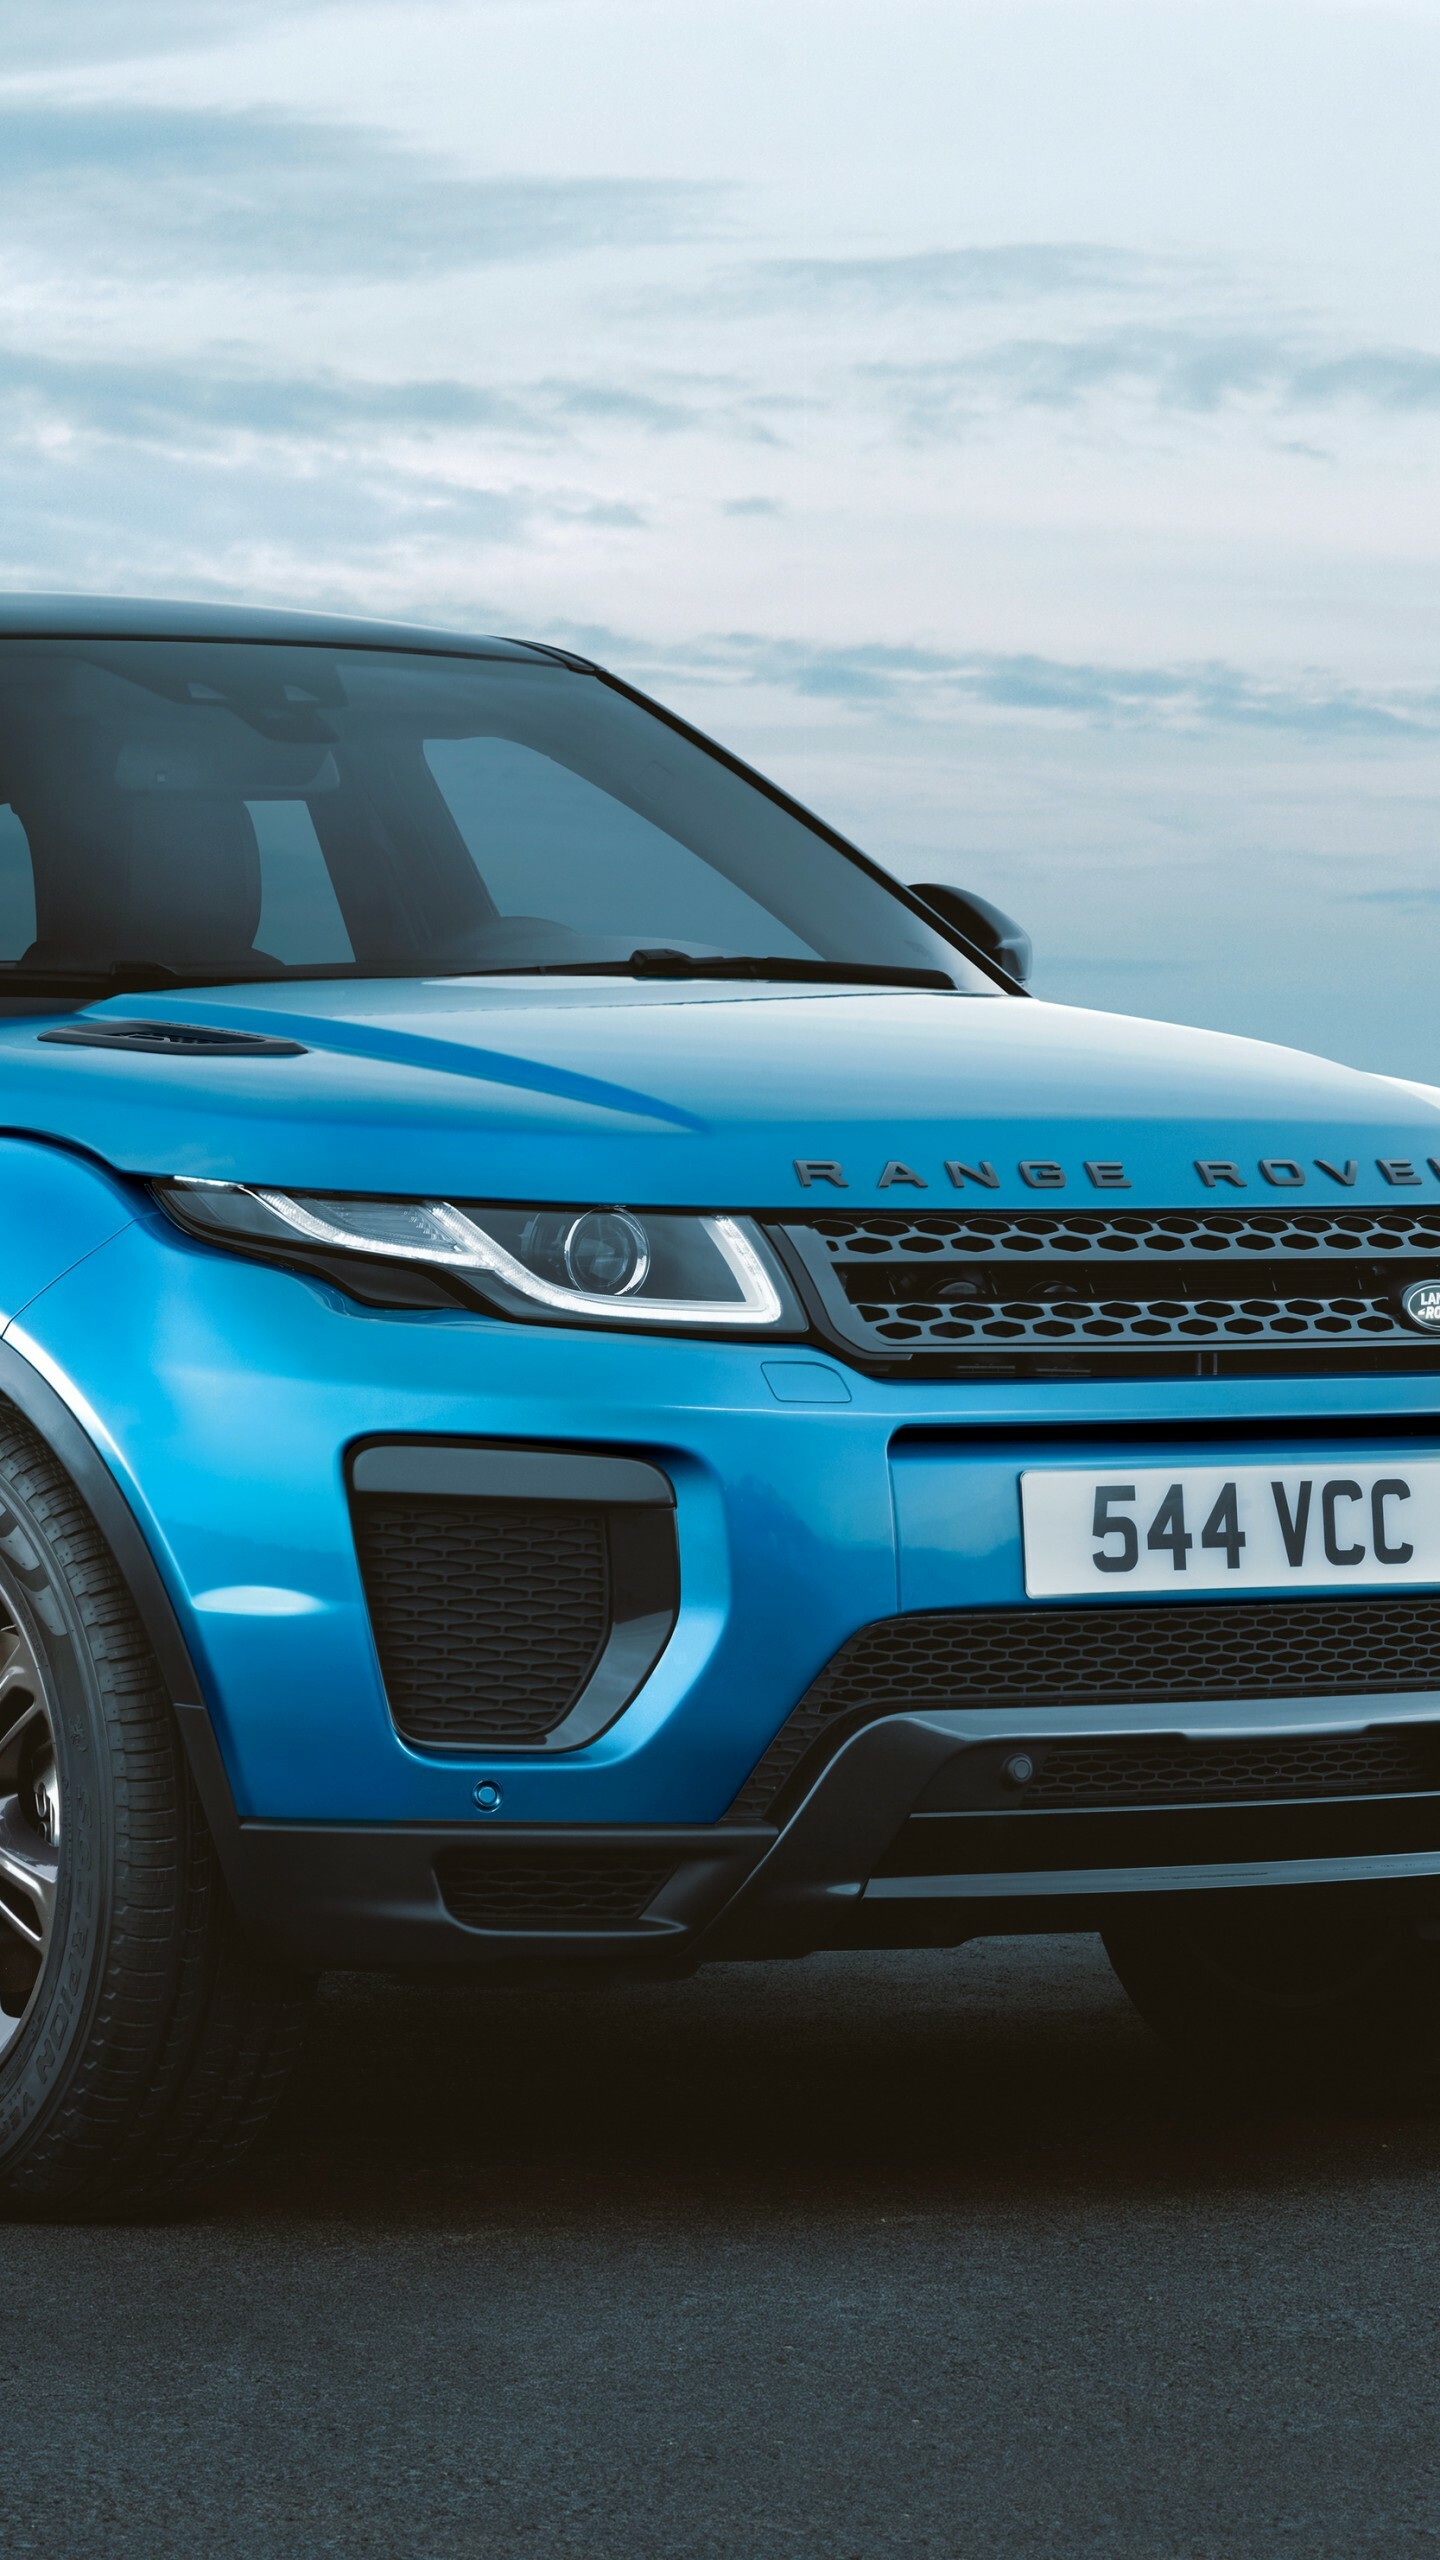 Range Rover: Evoque, 2019 cars, A British car manufacturer's marque. 1440x2560 HD Wallpaper.